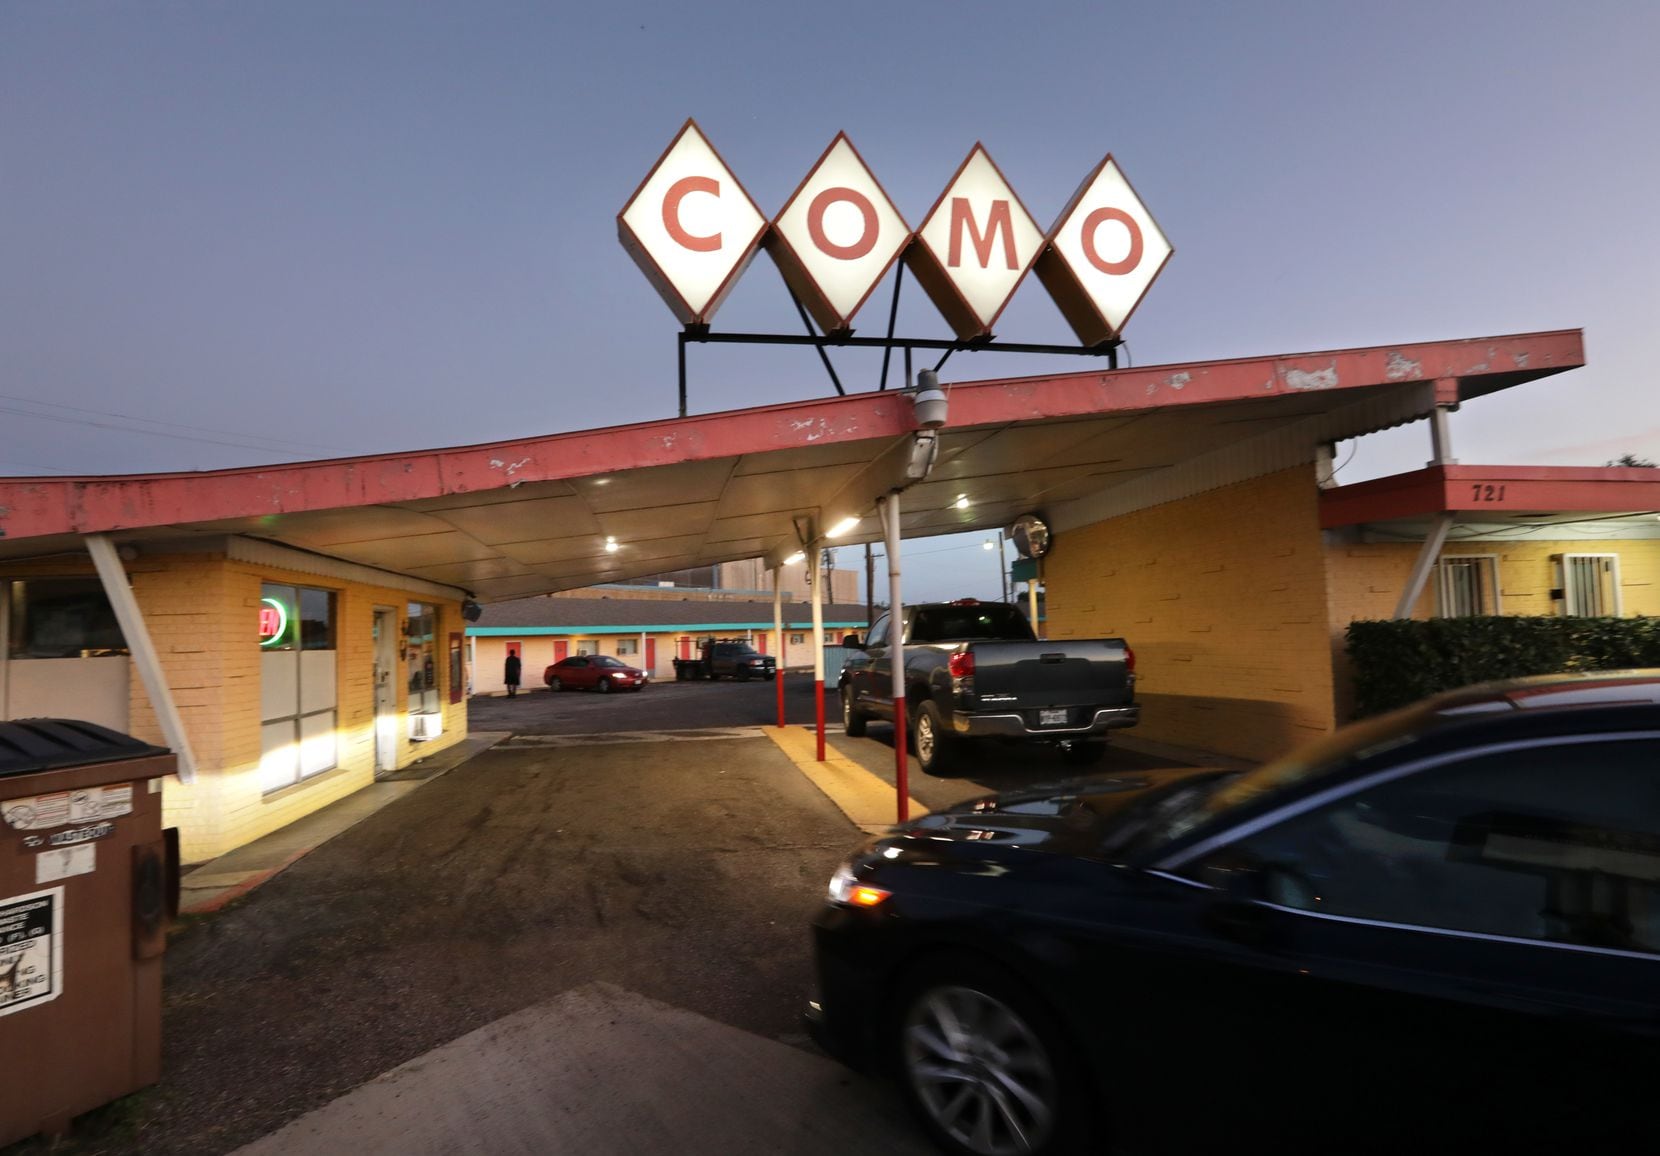 The Como Motel in Richardson on Oct. 21, 2021.